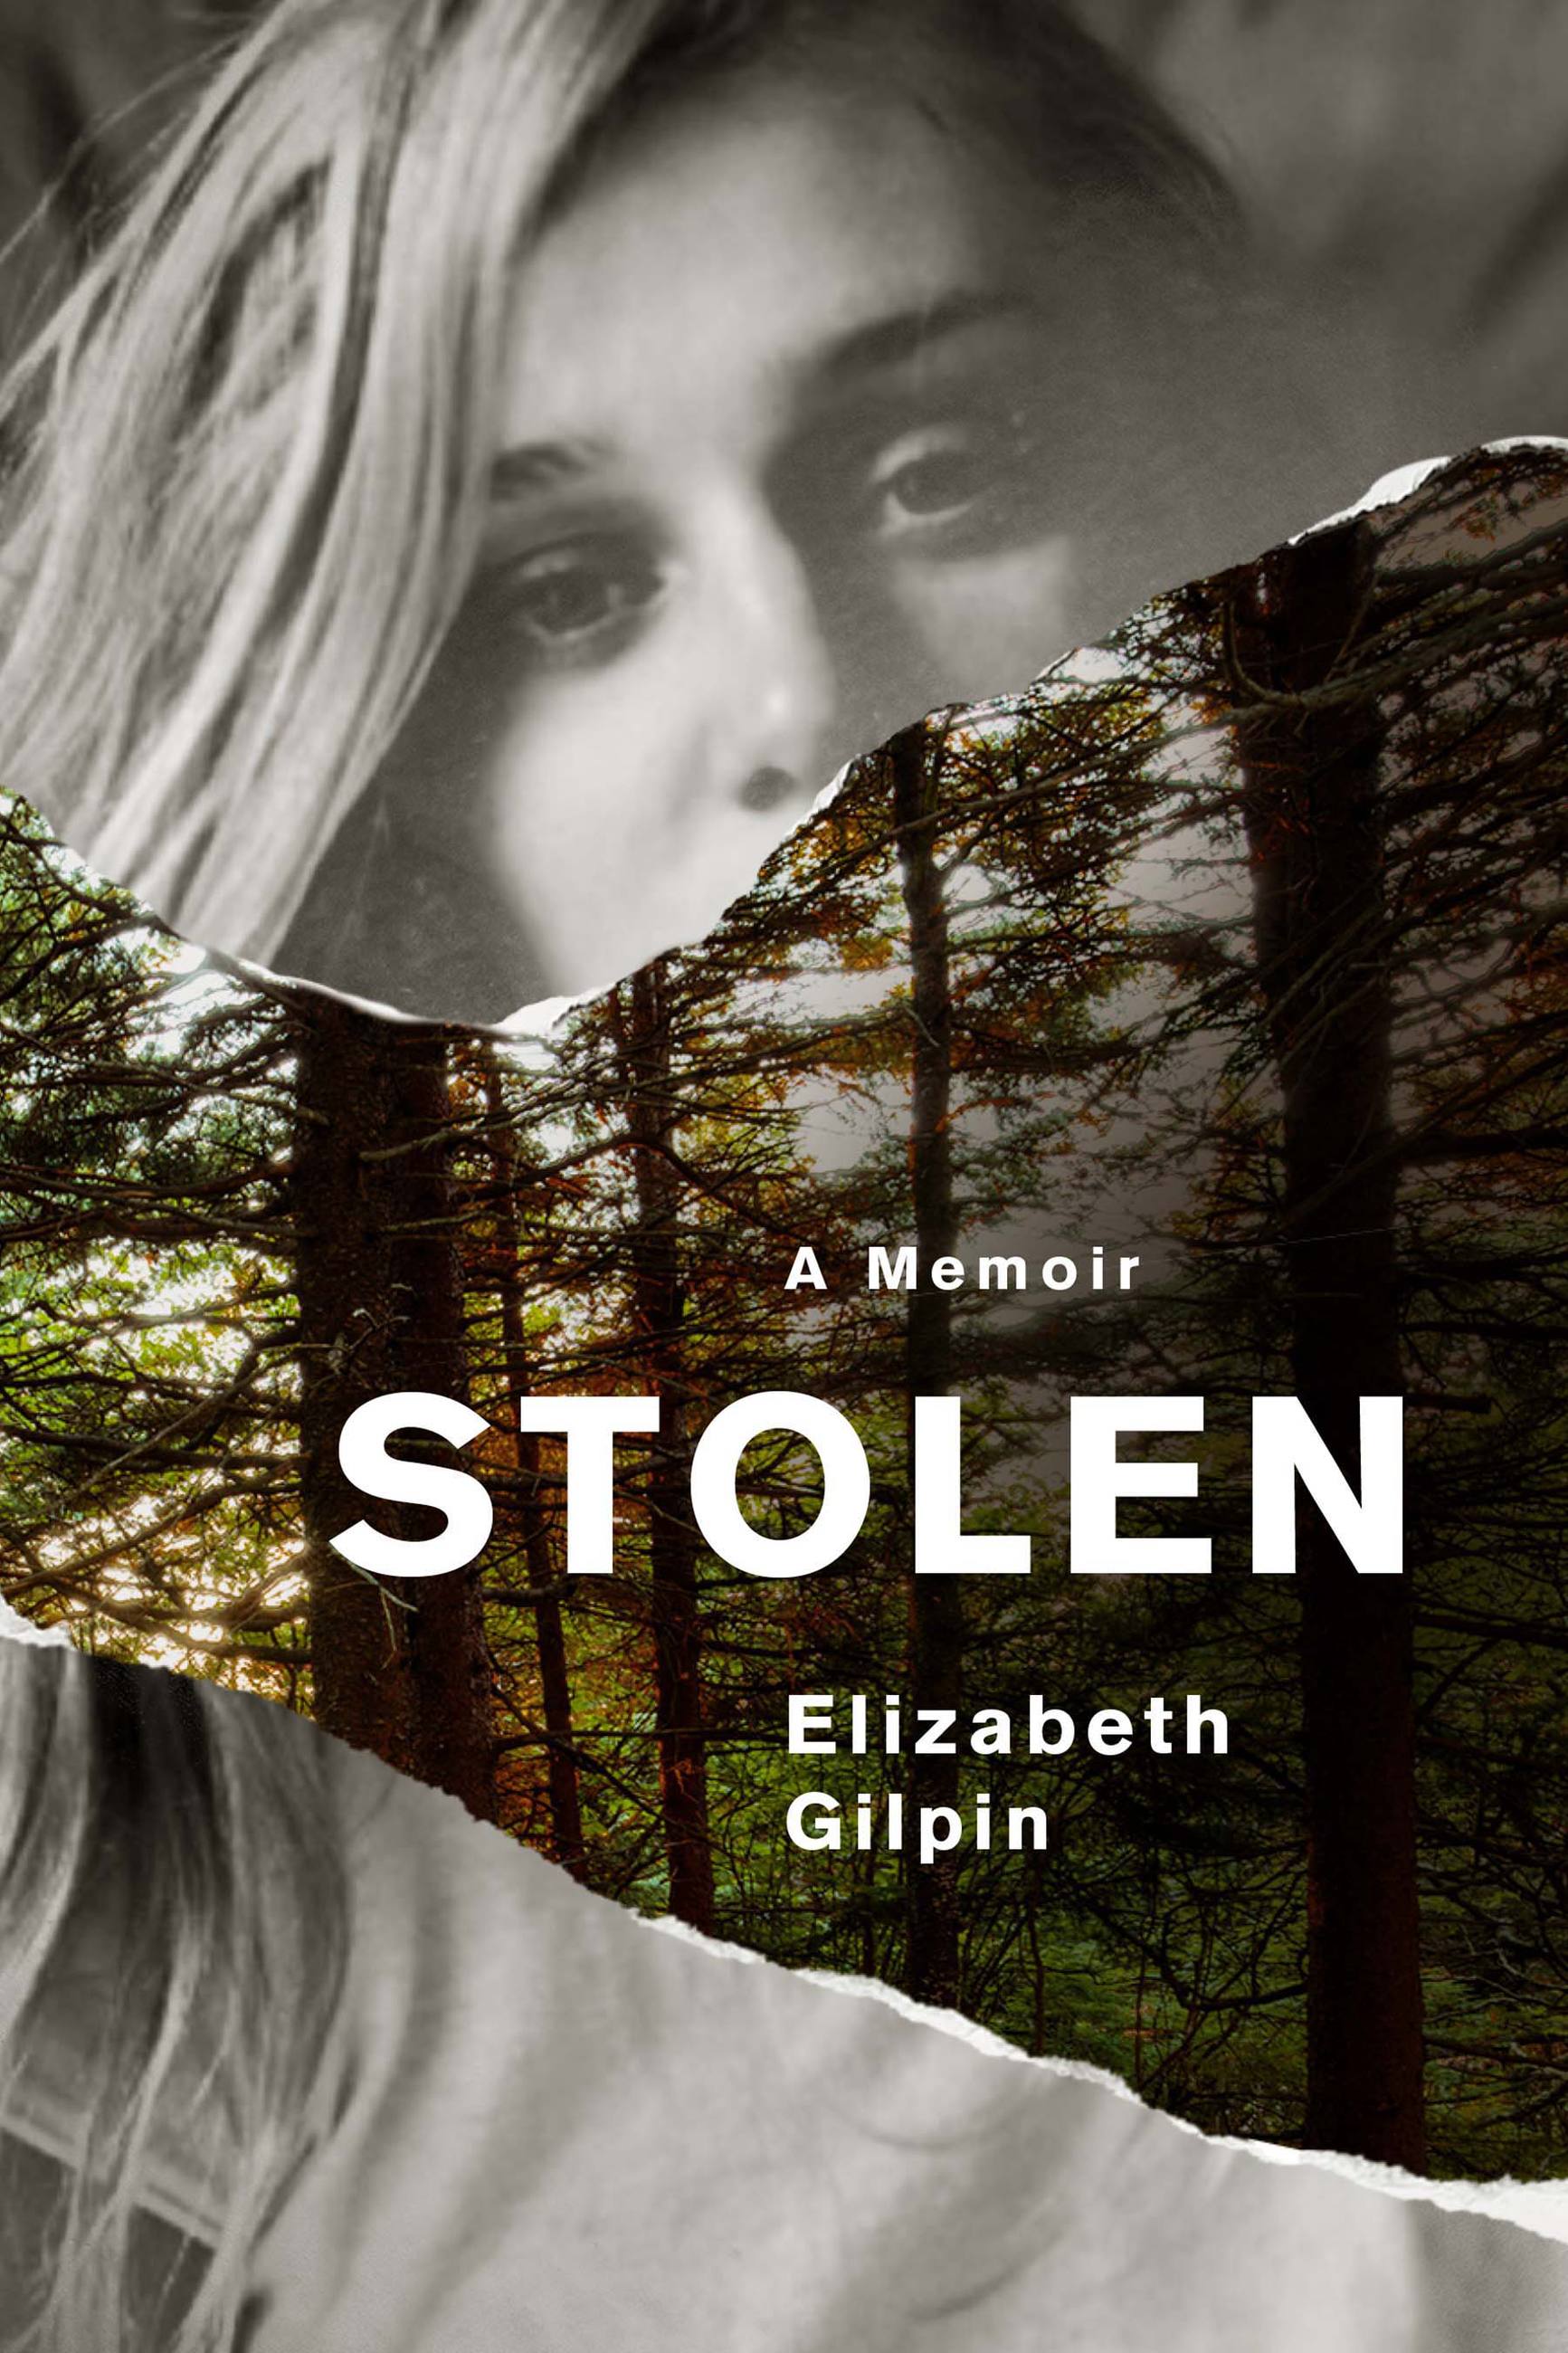 by　Gilpin　Group　Stolen　Book　Elizabeth　Hachette